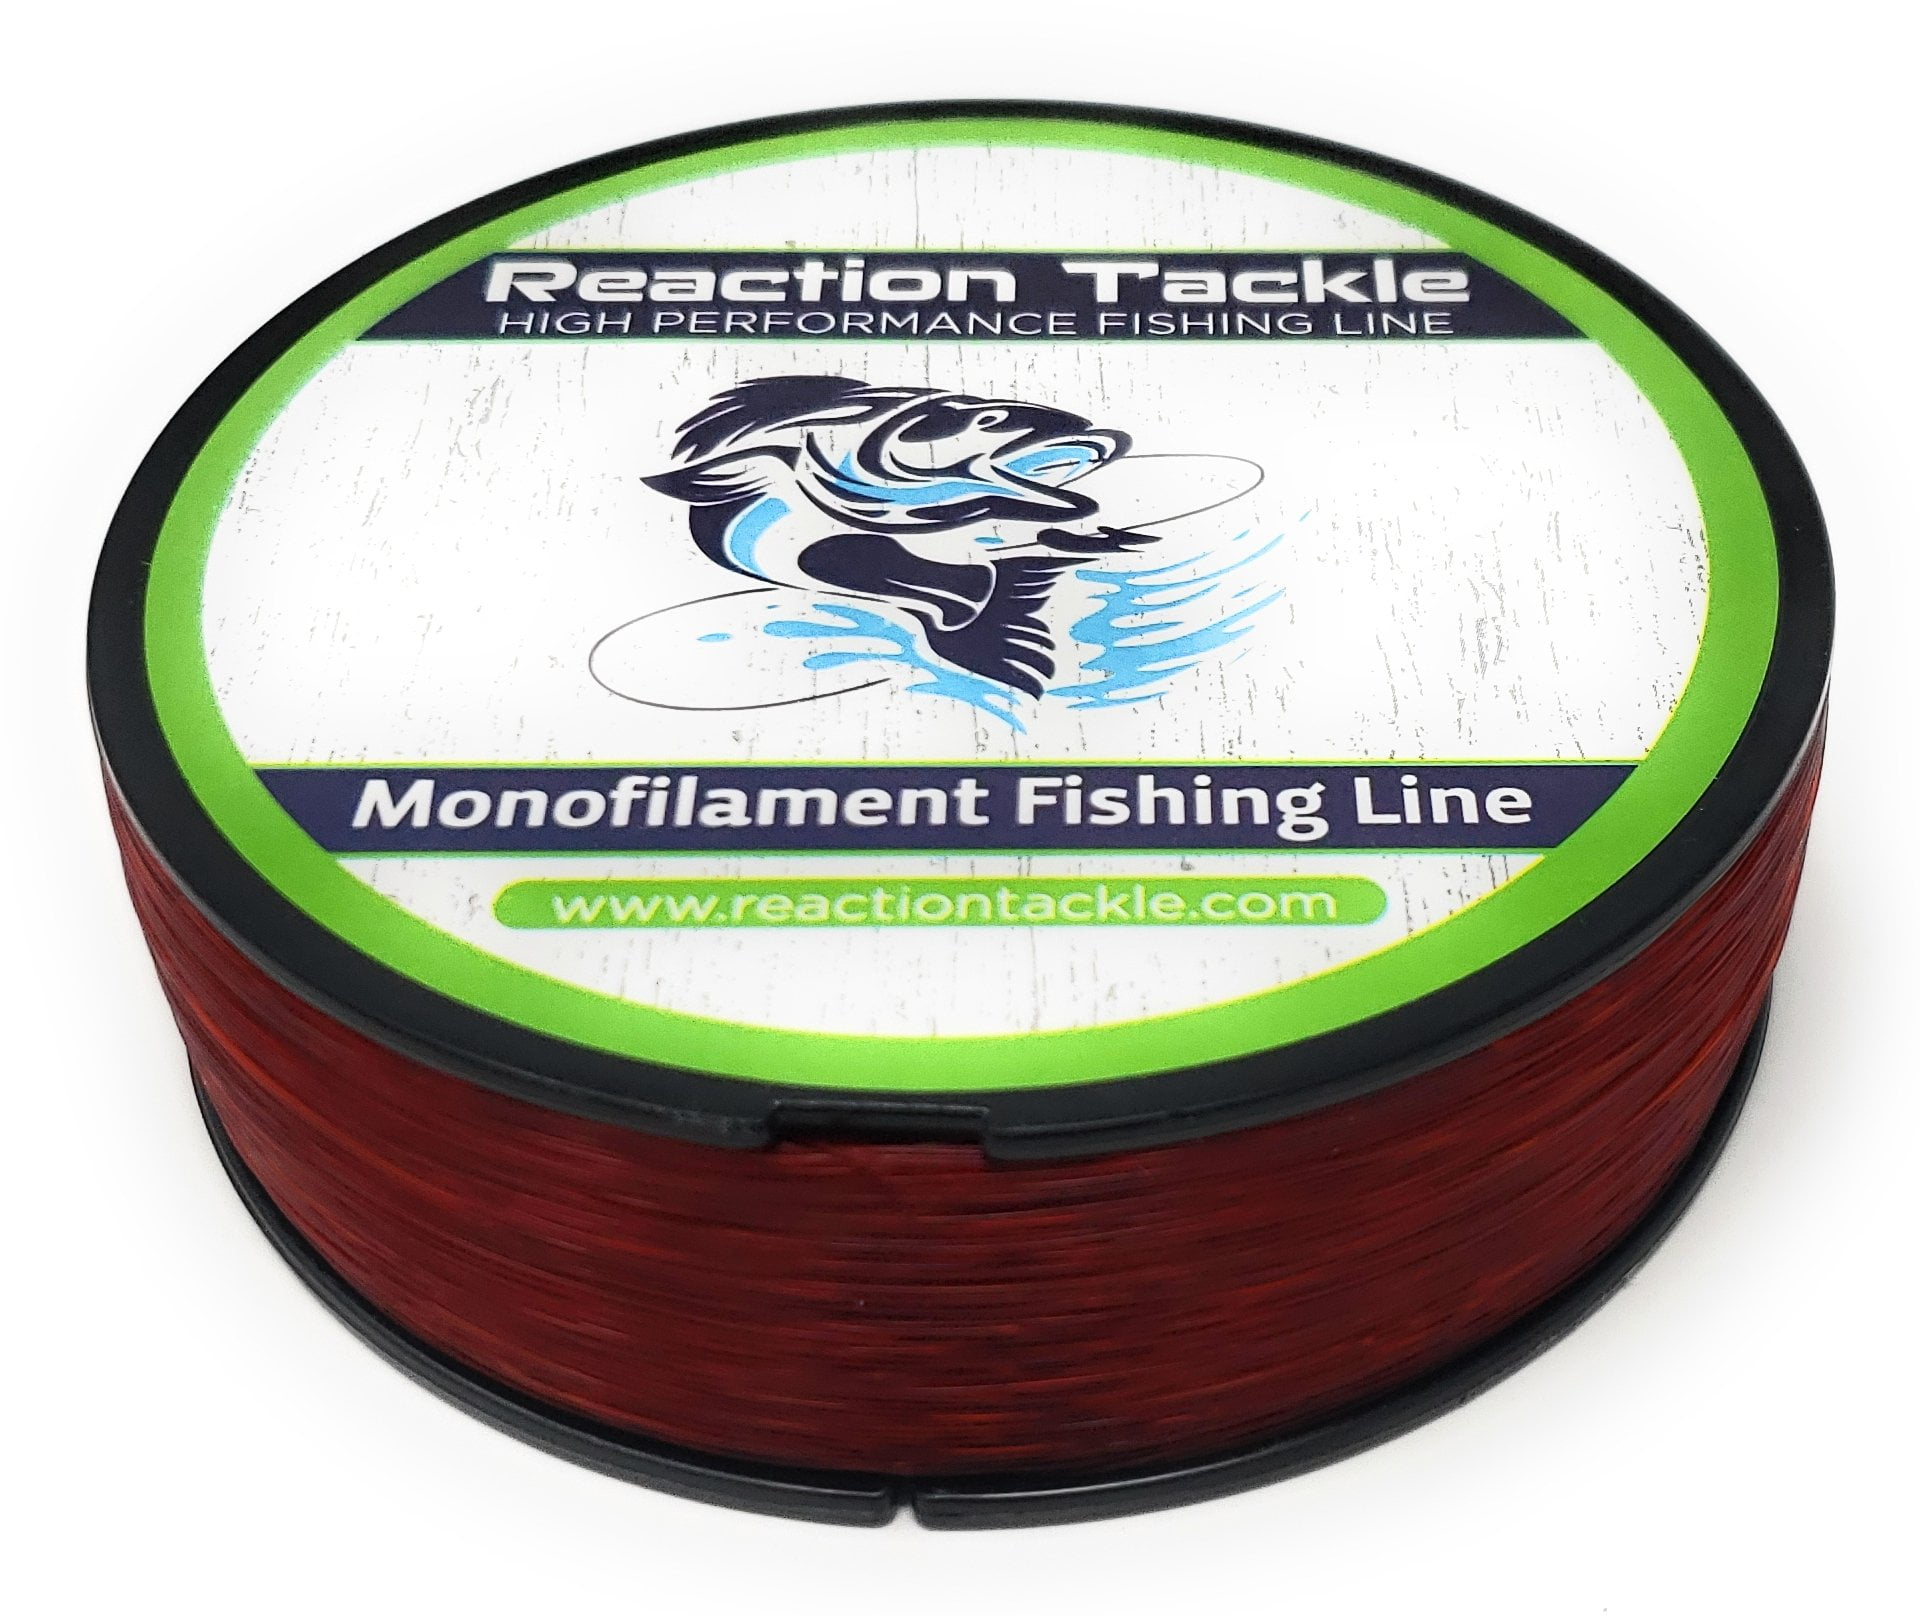 KastKing World's Premium Monofilament Fishing Line - Paralleled